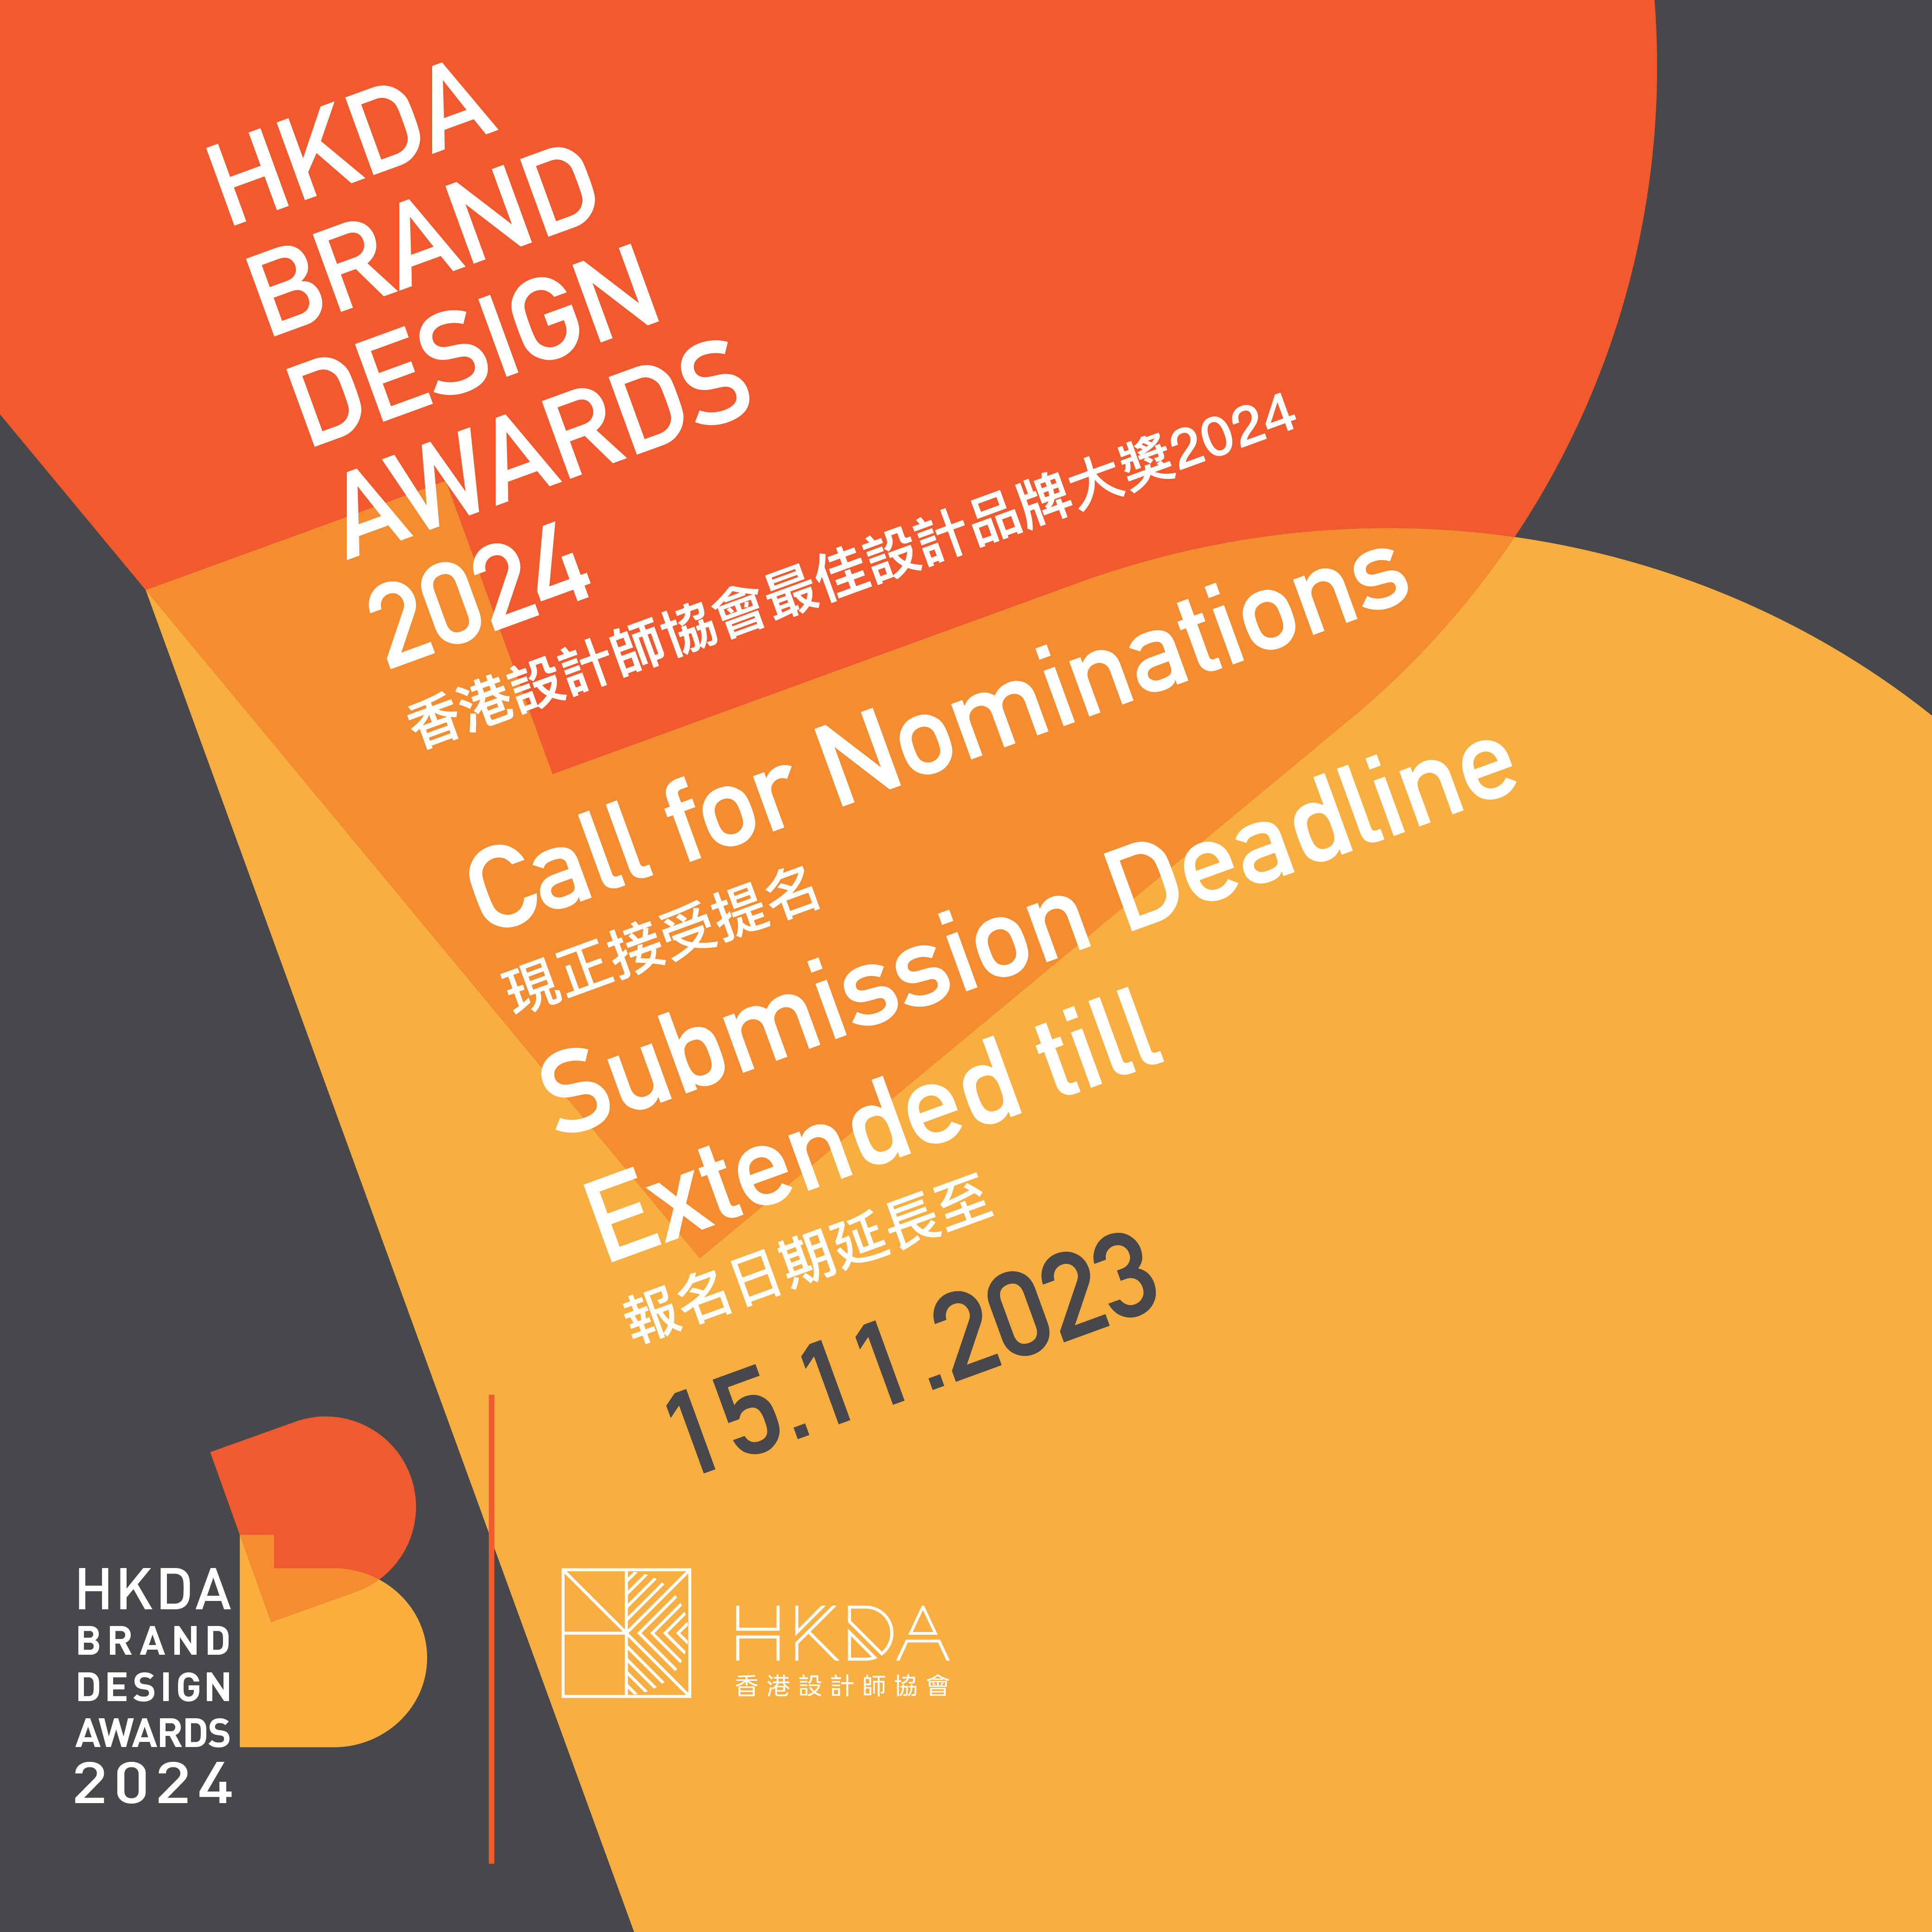 Supporting Event - Brand Design Awards 2024 | Submission Deadline extended until Nov 15, 2023